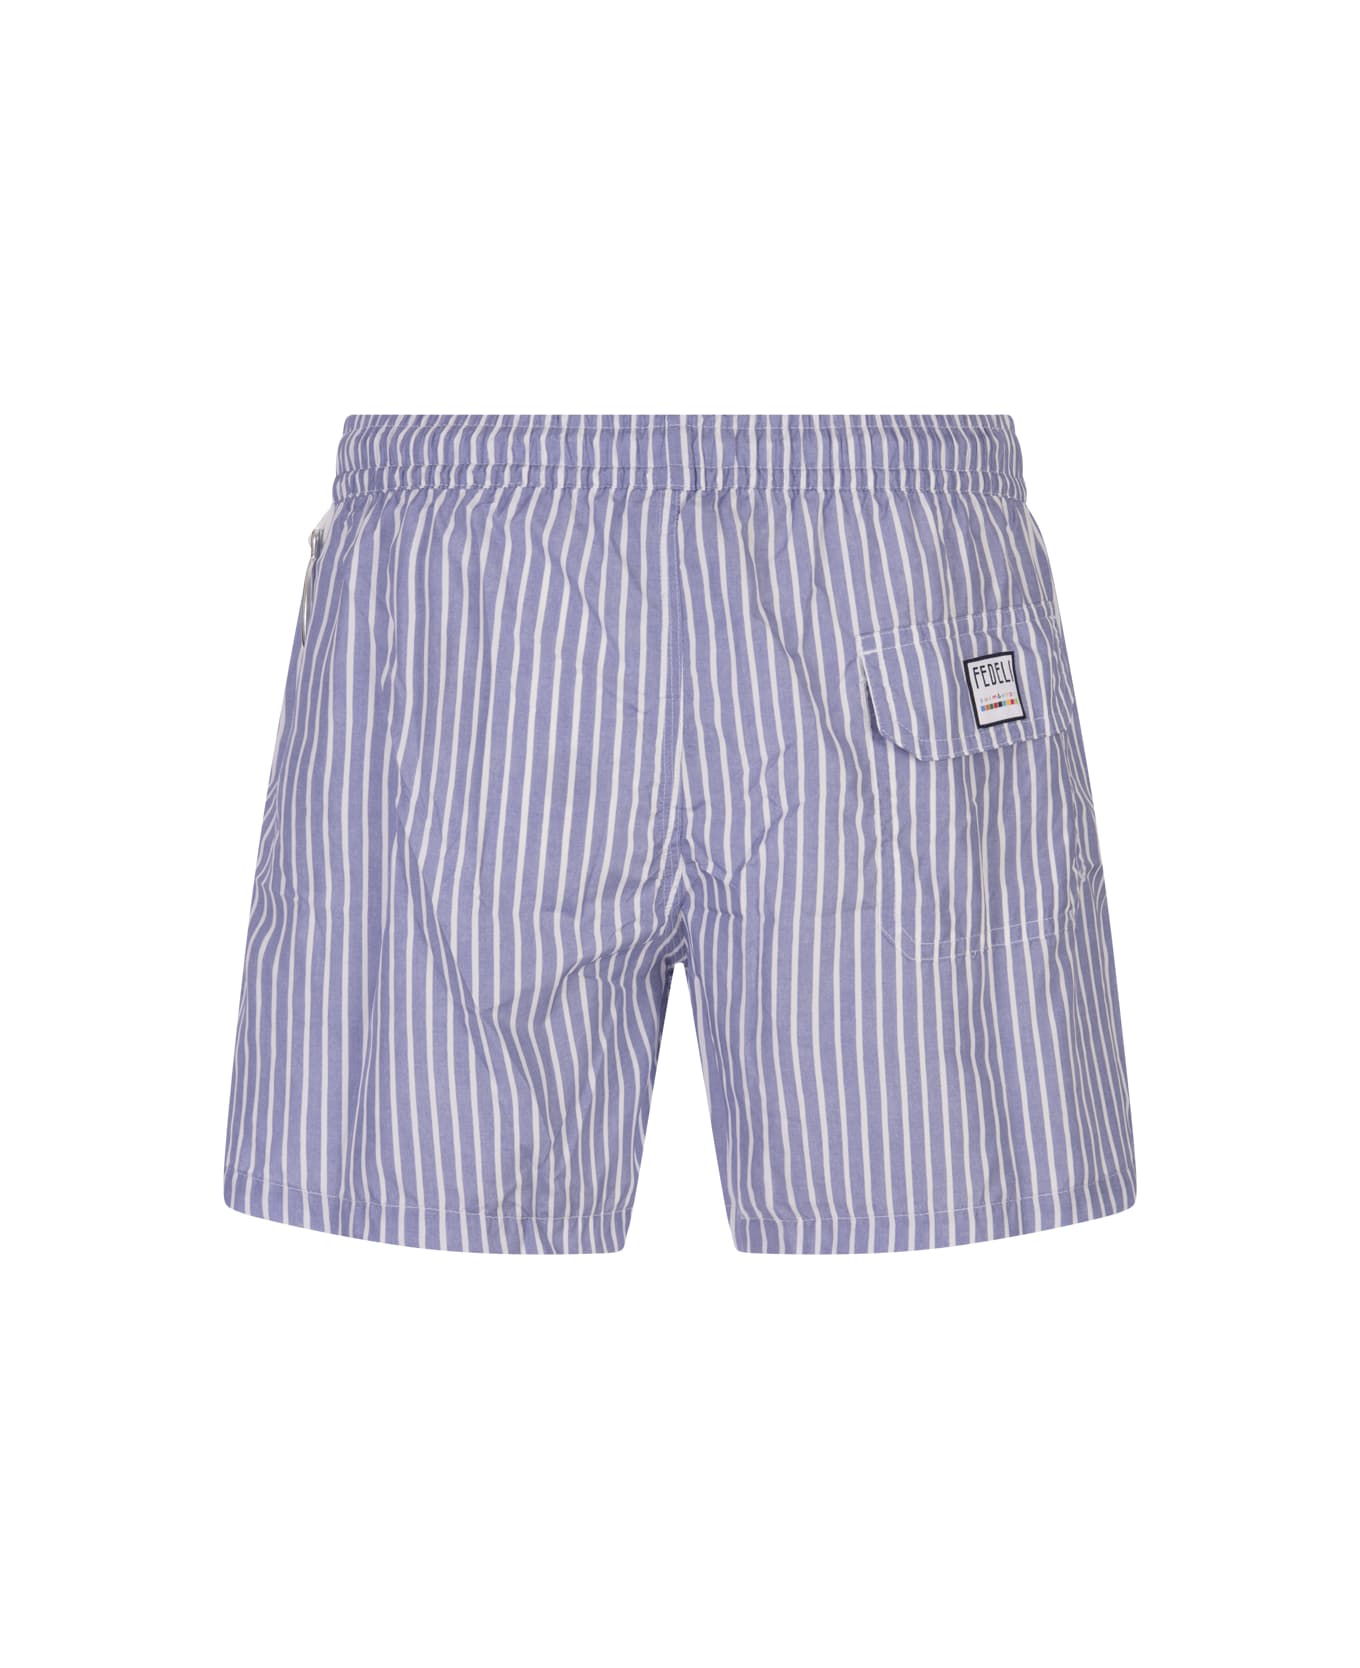 Fedeli Cornflower Blue And White Striped Swim Shorts - Blue